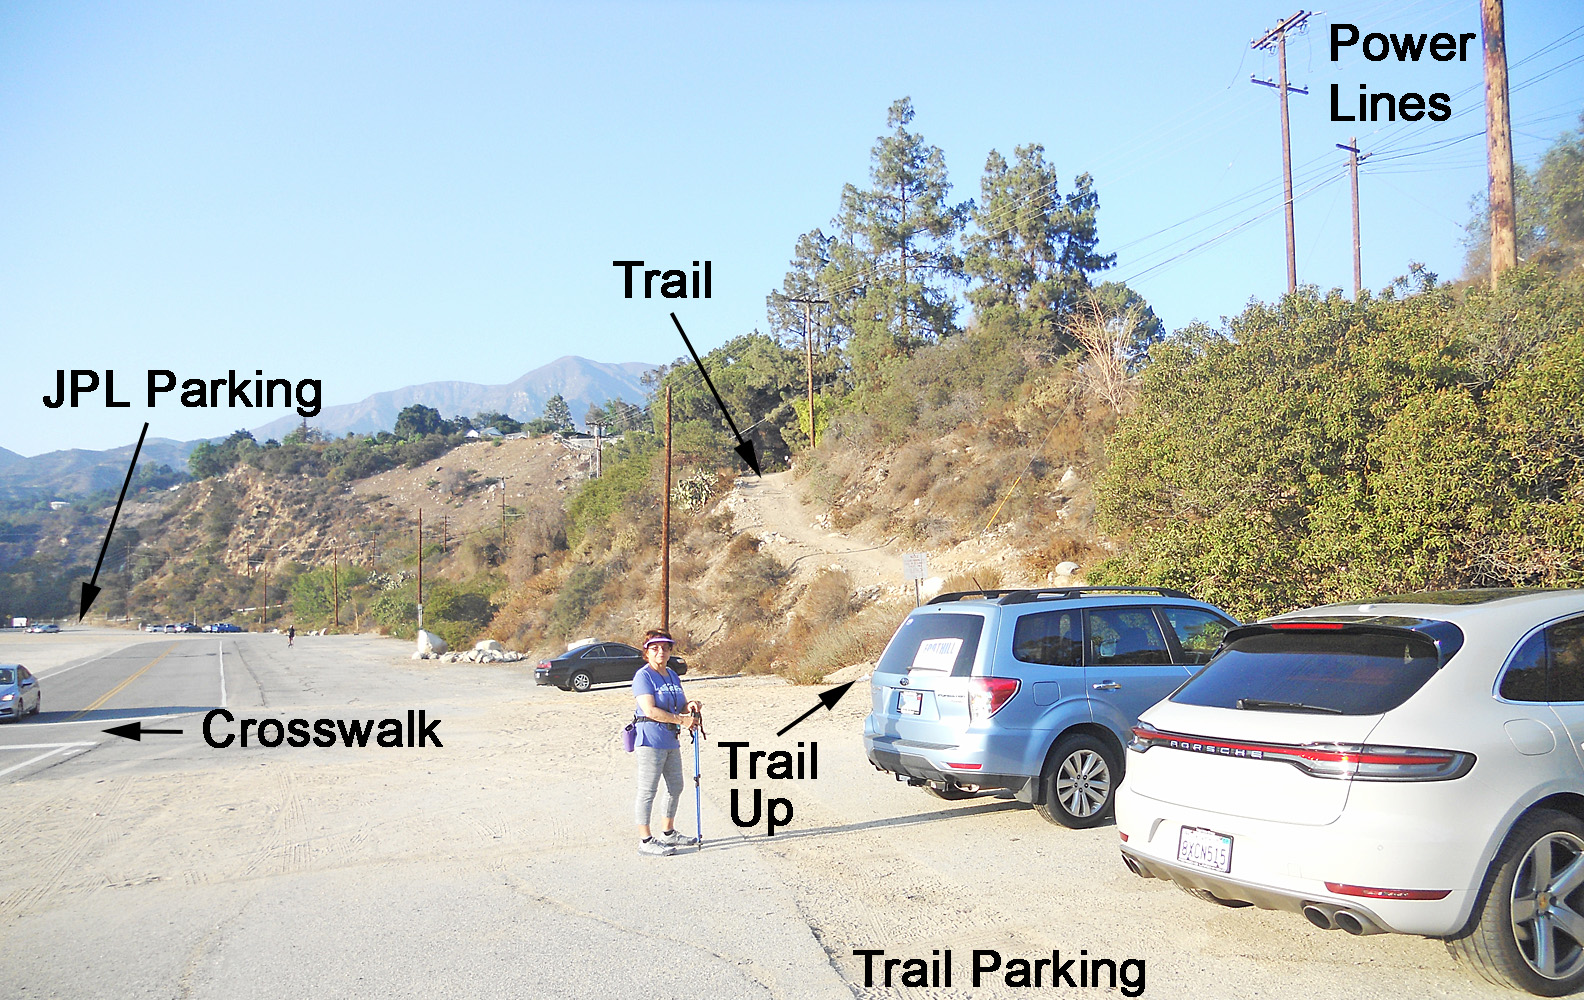 JPL East Parking Lot